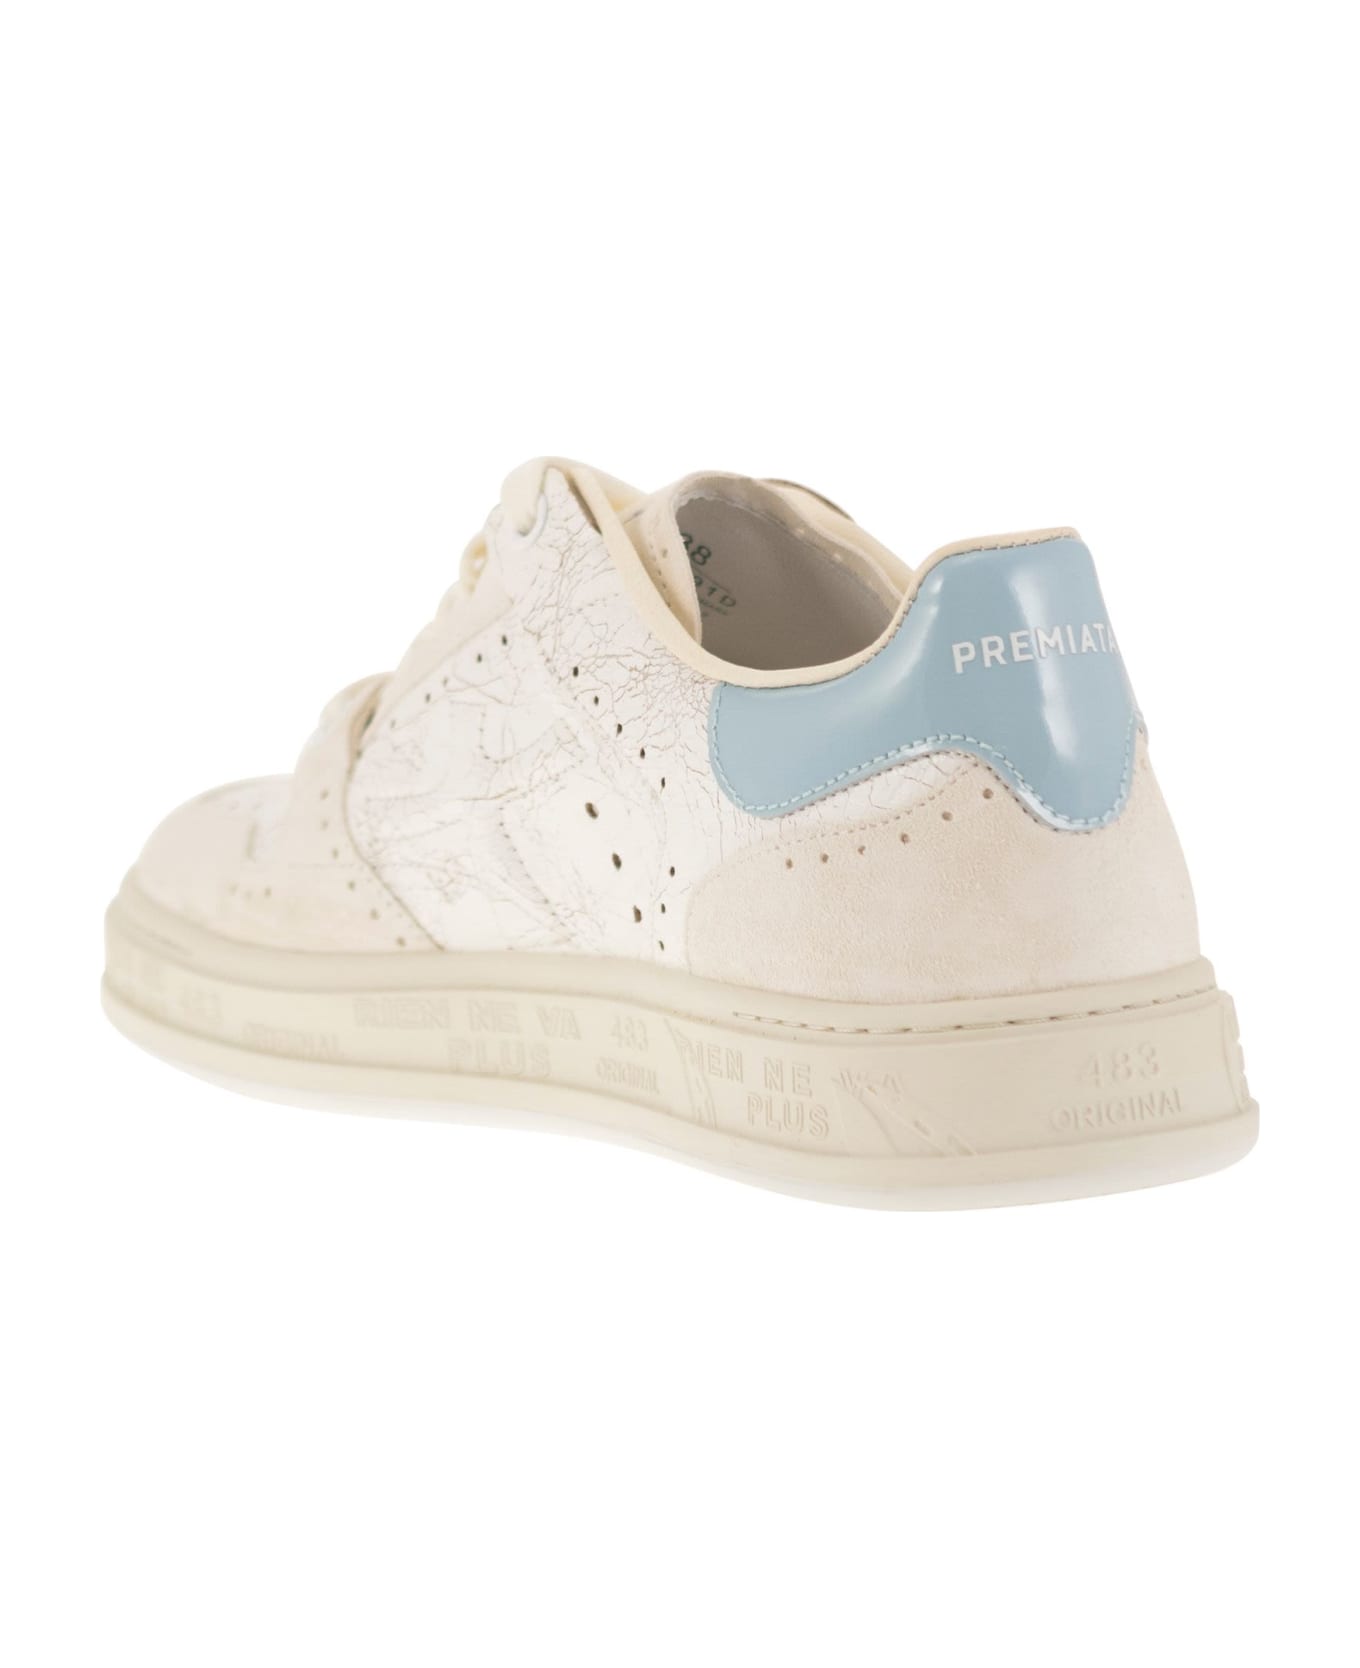 Premiata Quinn-d - Sneakers - White/light Blue